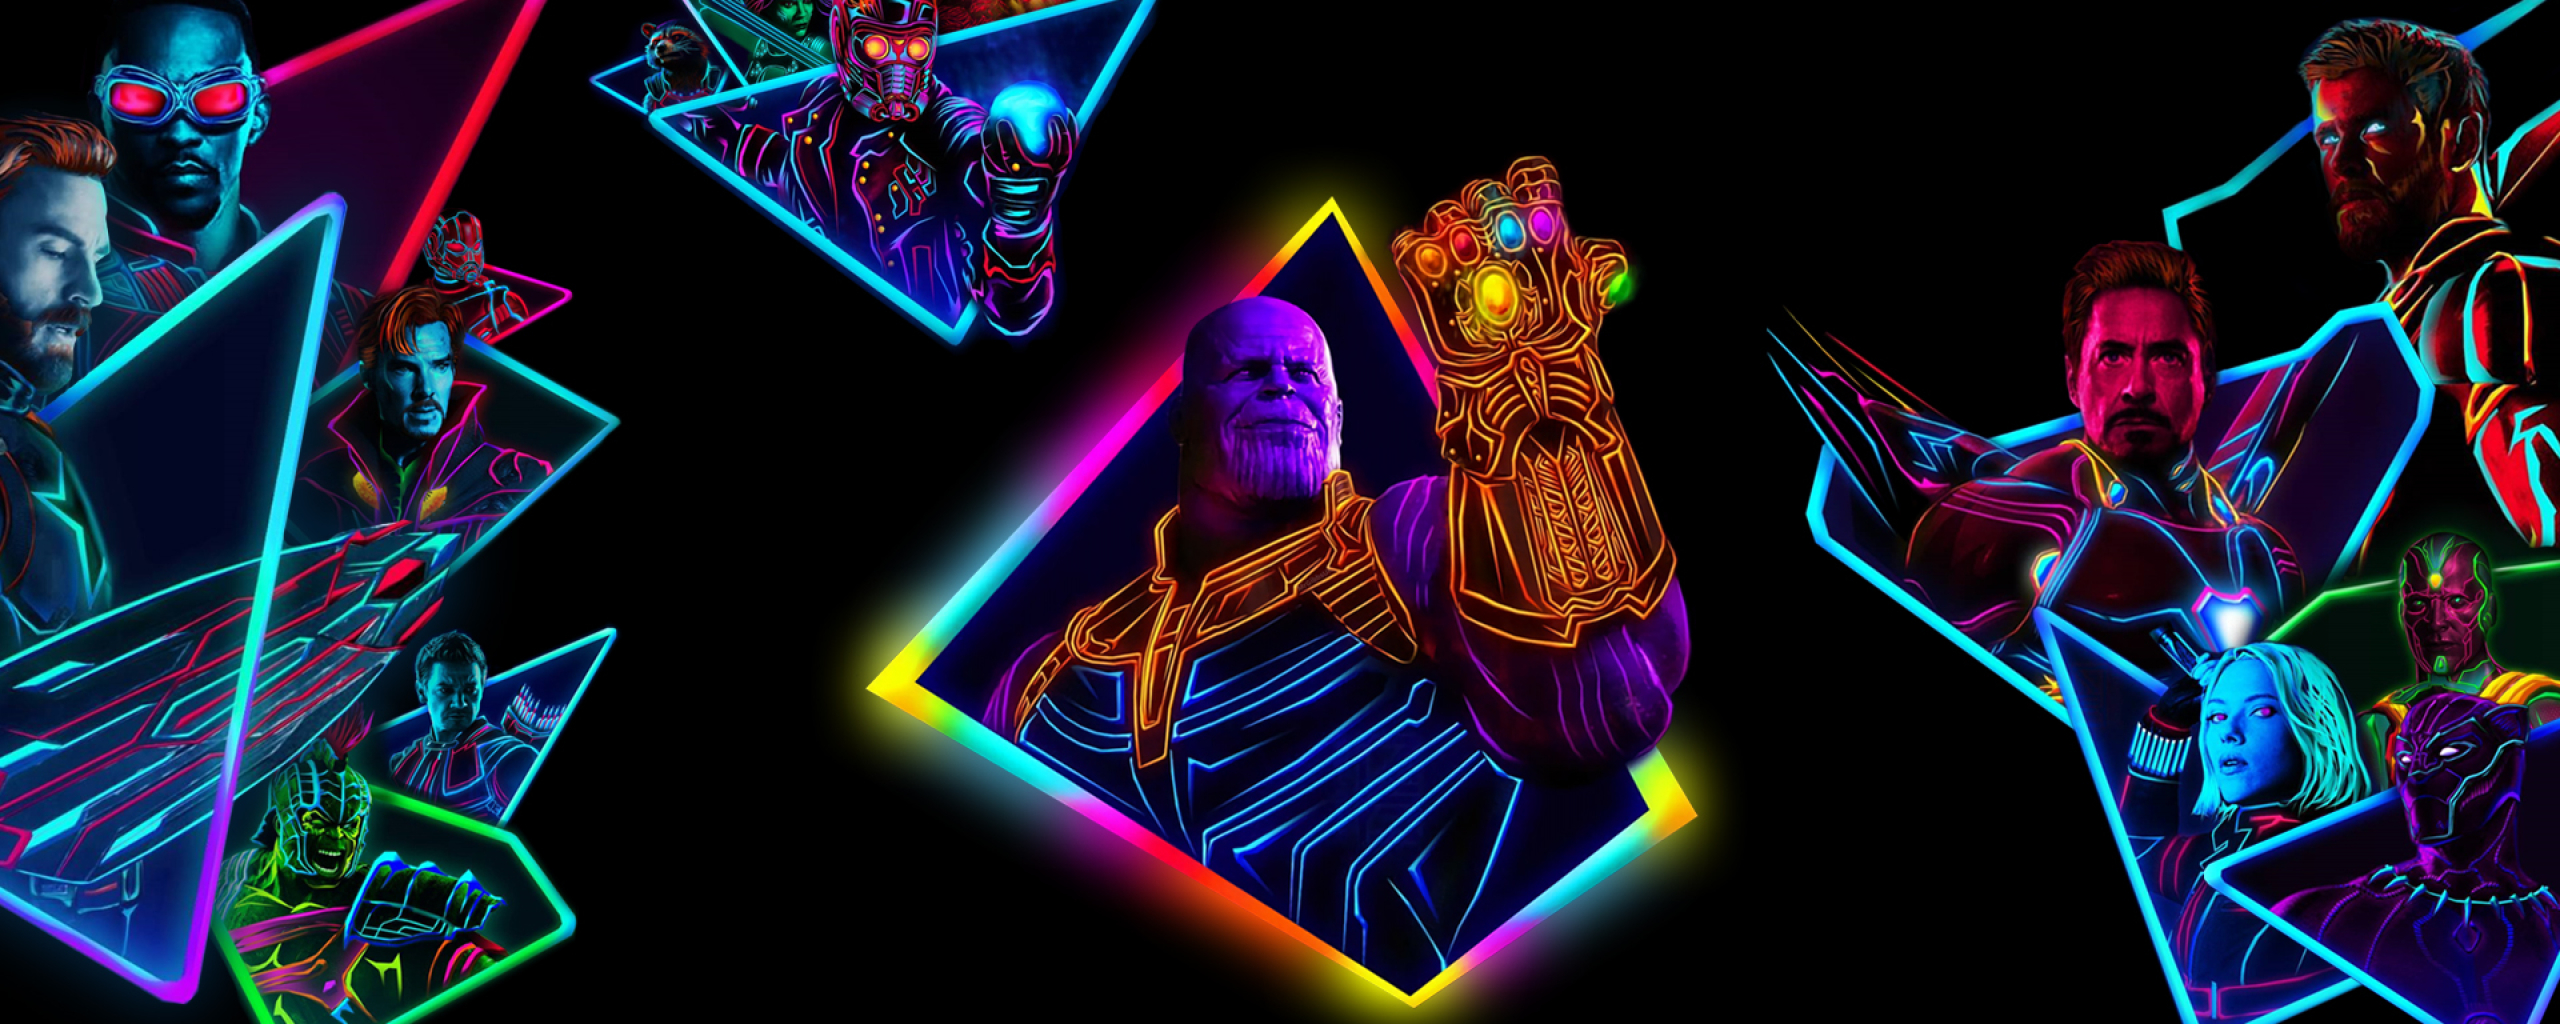 Avengers Infinity War 80s Neon Style Art, Full HD Wallpaper